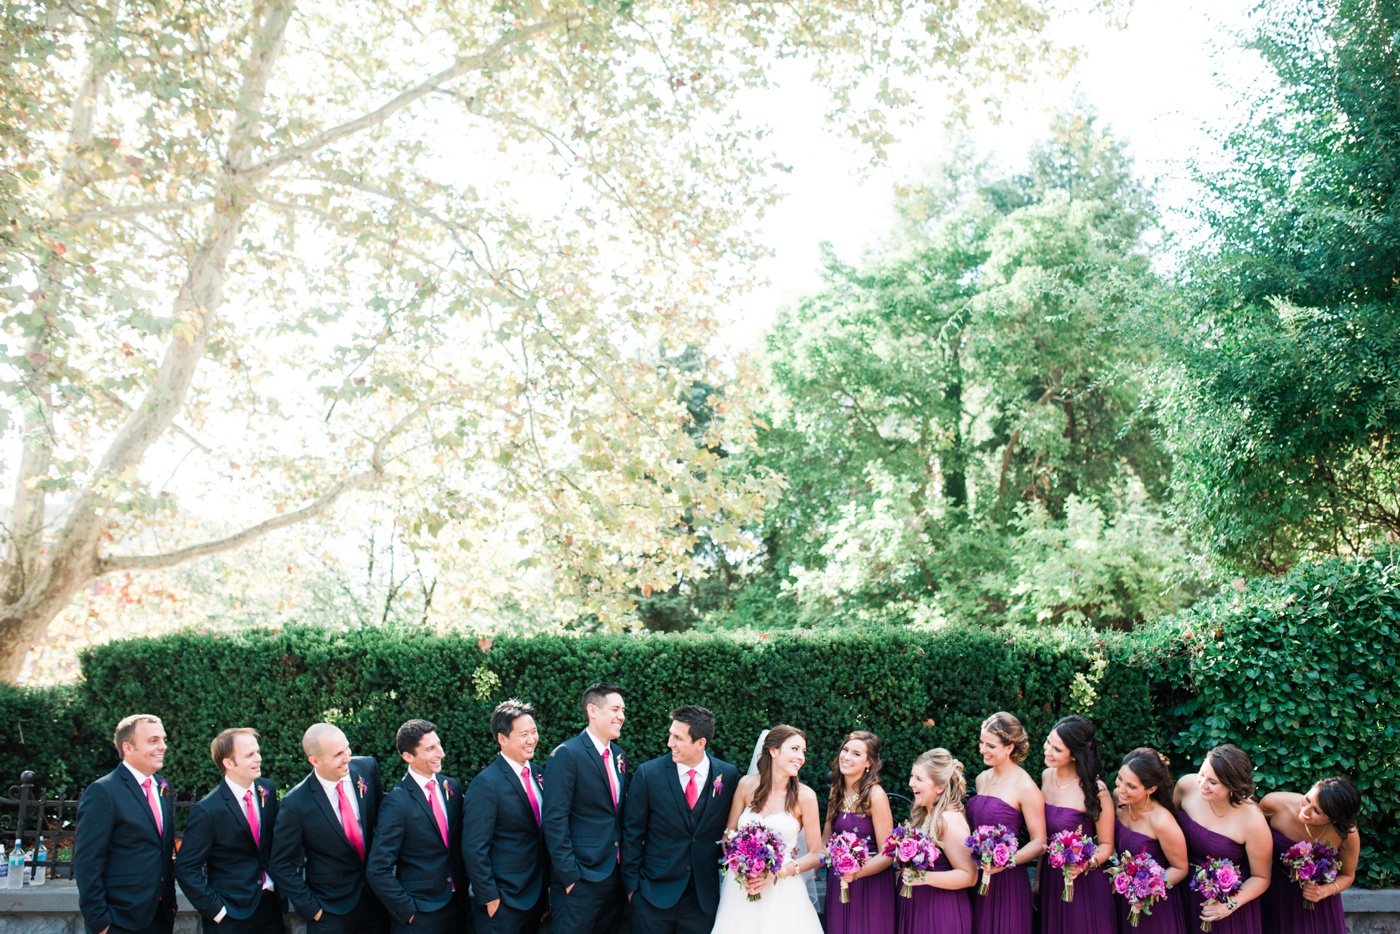 56 - Purple Floor Length Donna Morgan Bridesmaid Dress - A Garden Party Florist photo